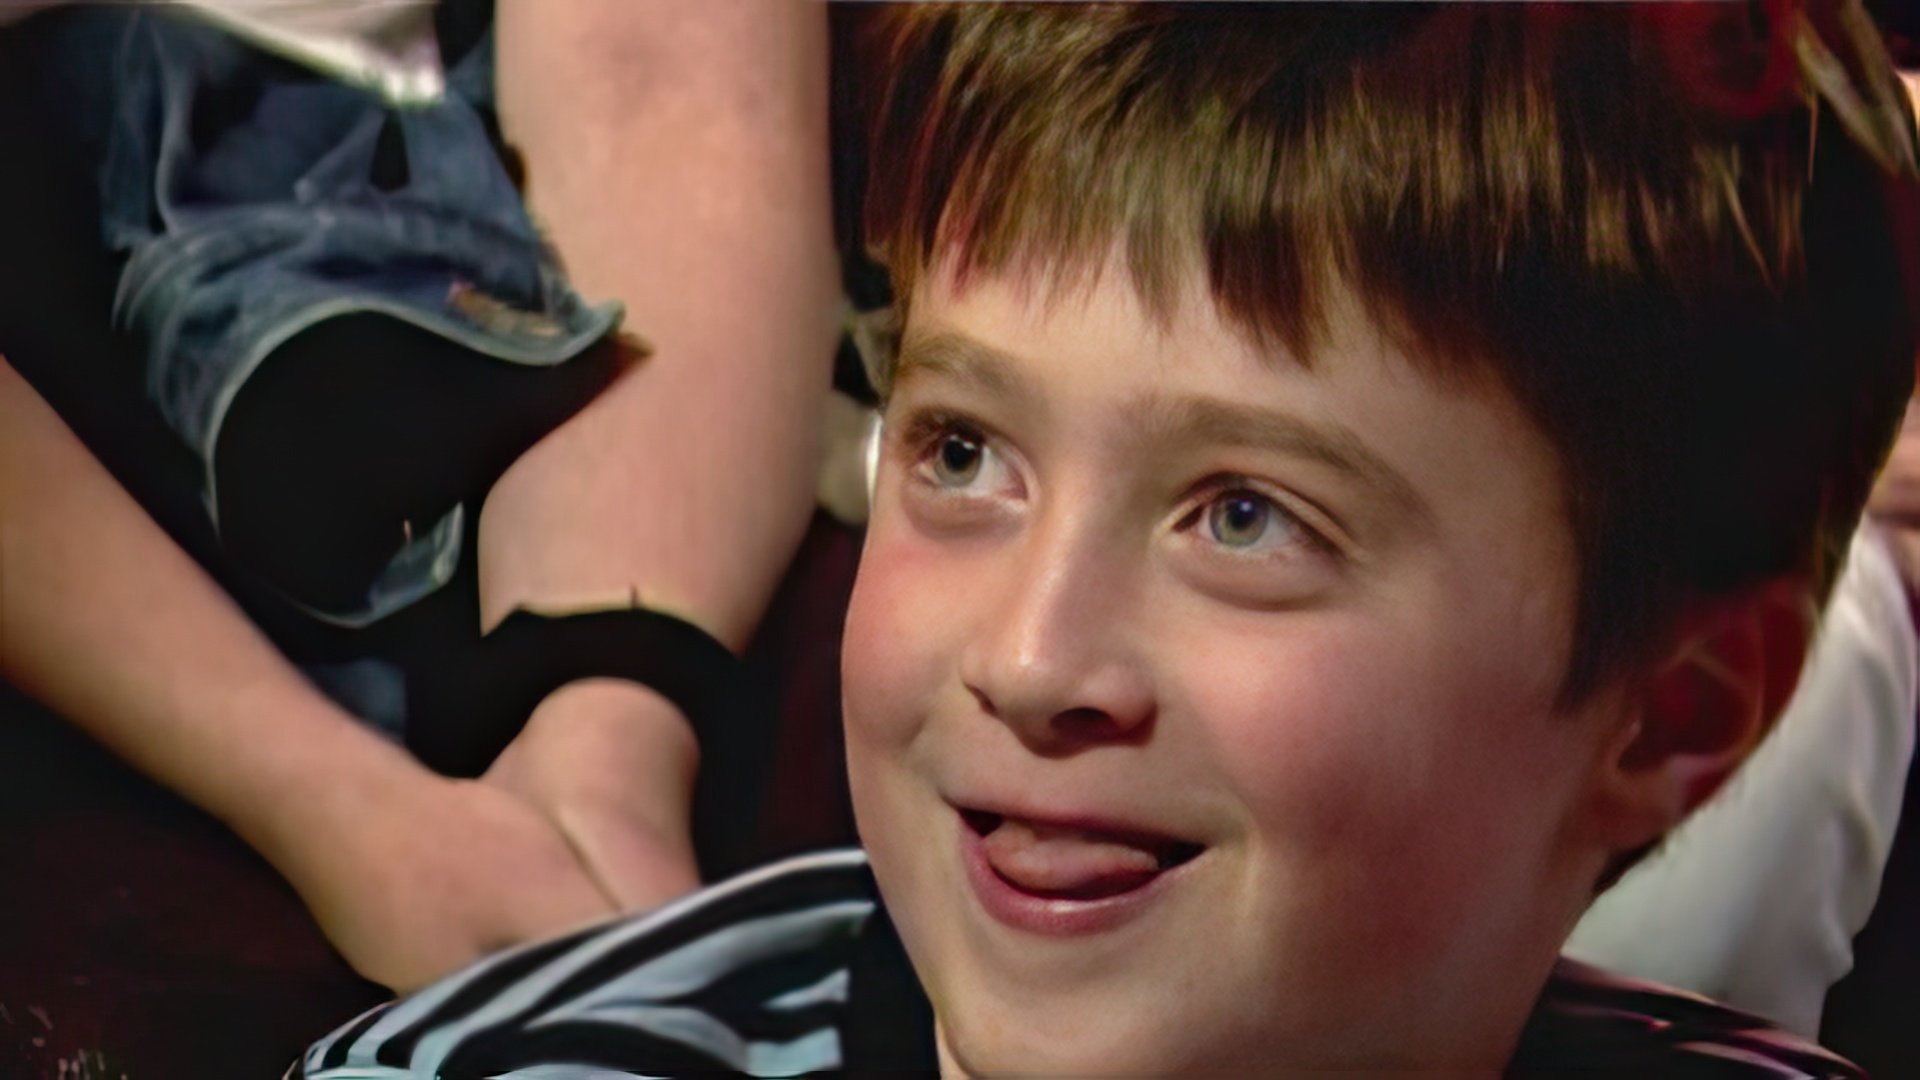 Daniel Radcliffe as a child